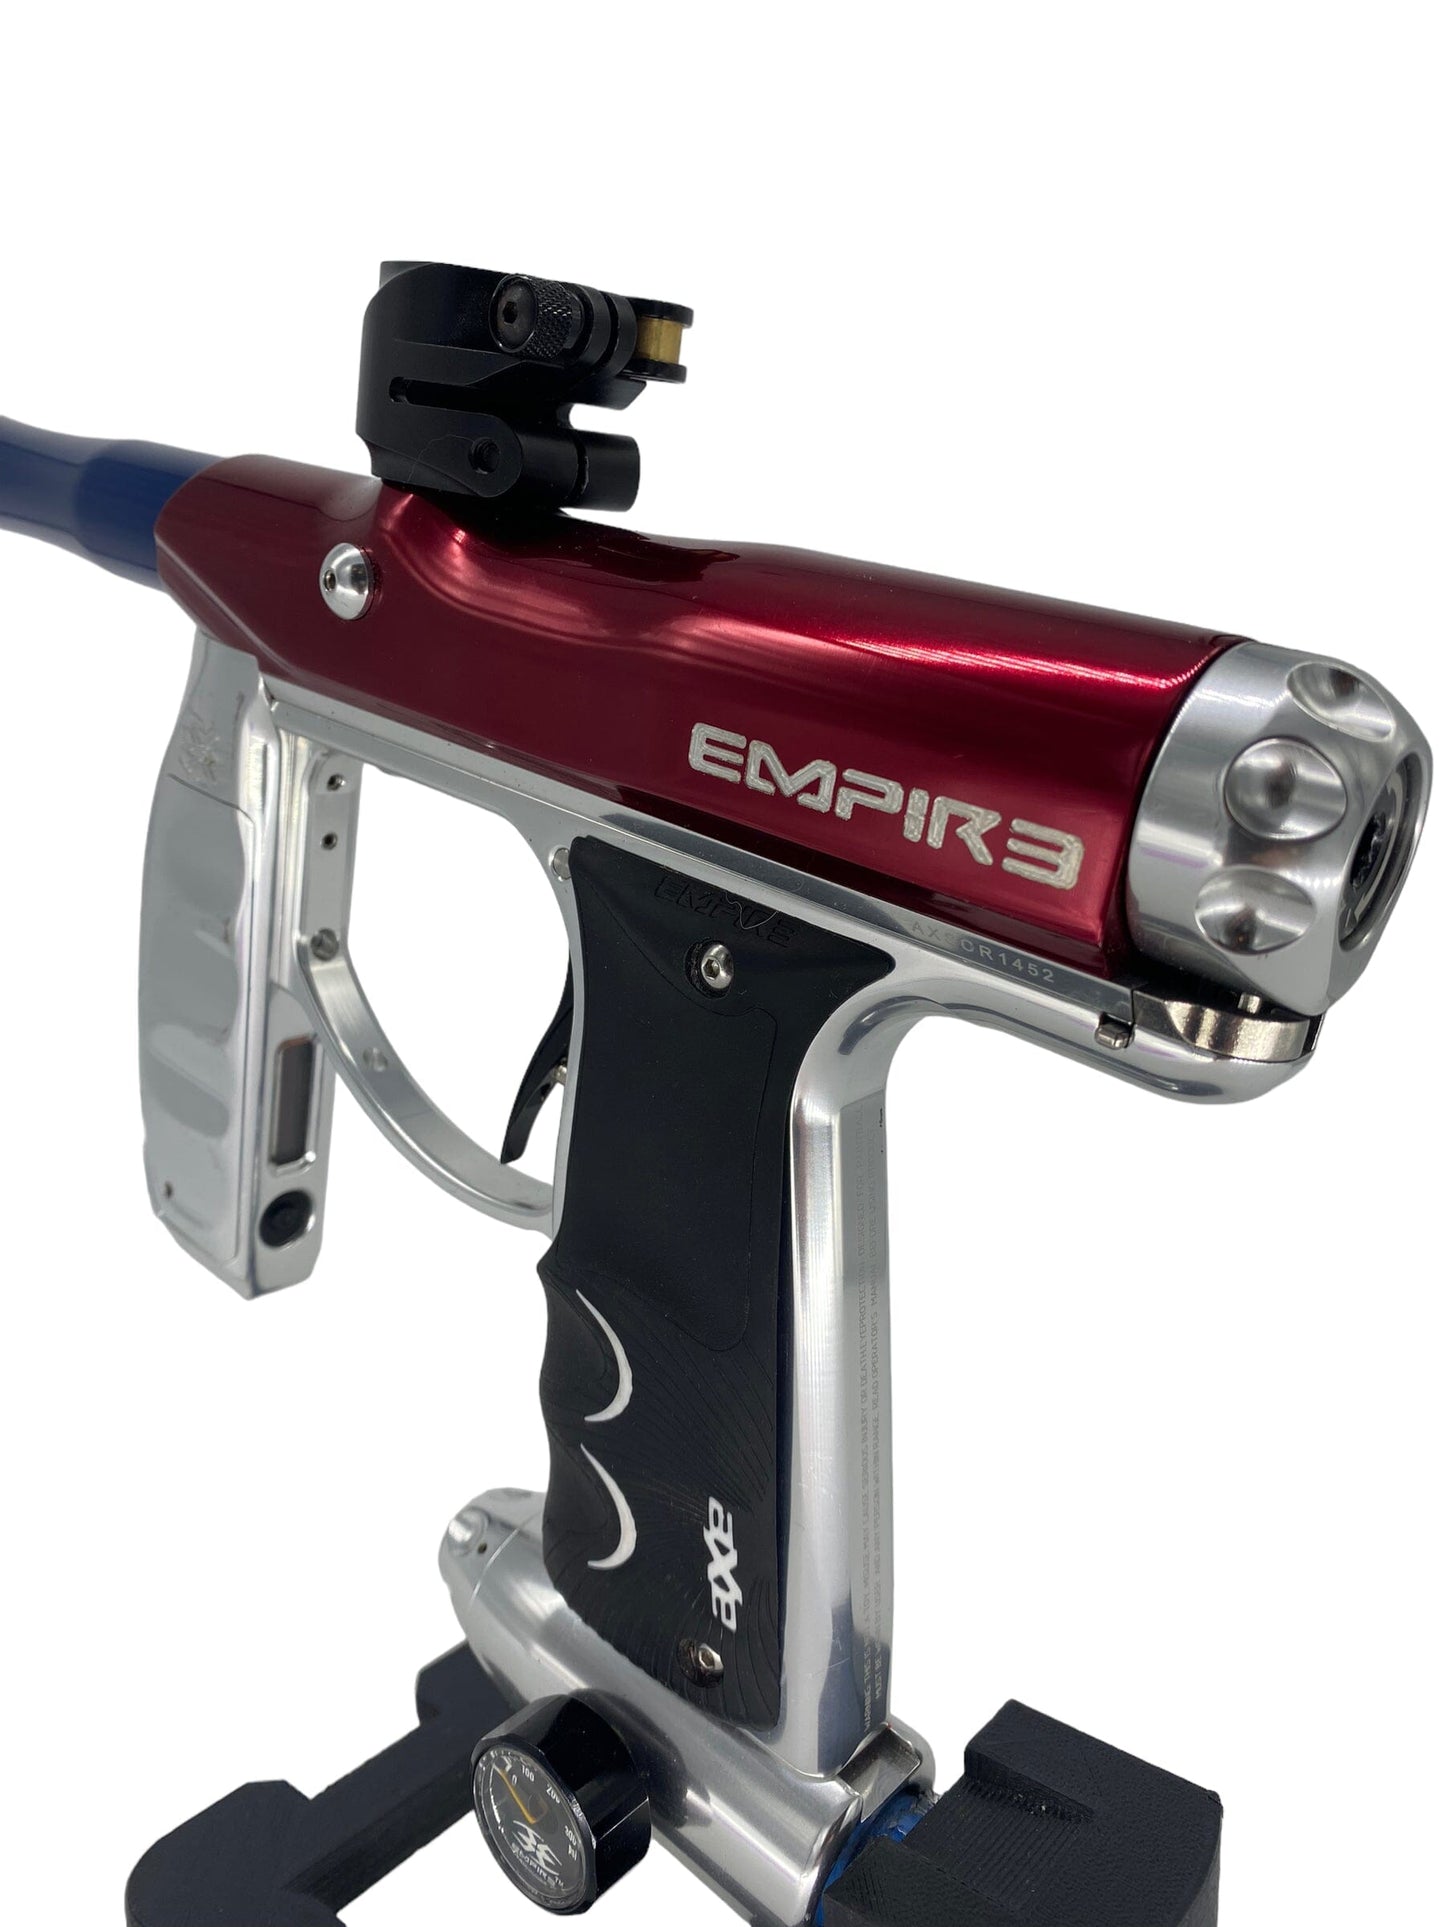 Used Empire Axe Redline Oled Paintball Gun from CPXBrosPaintball Buy/Sell/Trade Paintball Markers, Paintball Hoppers, Paintball Masks, and Hormesis Headbands